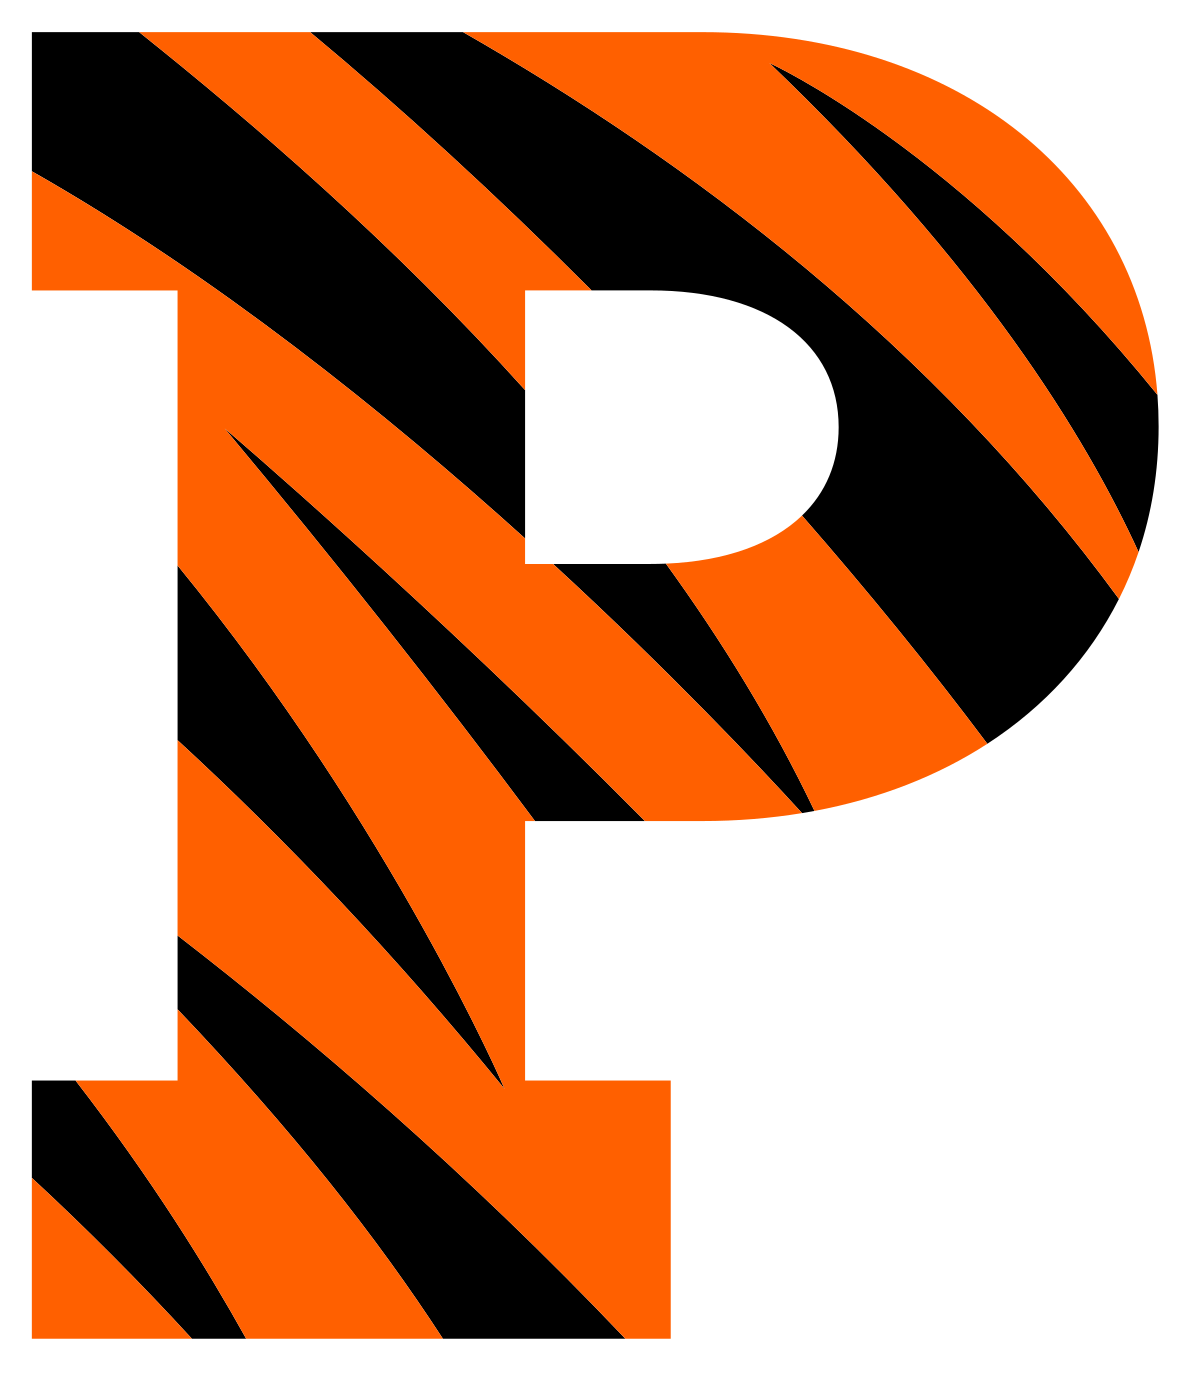 Princeton-Logo